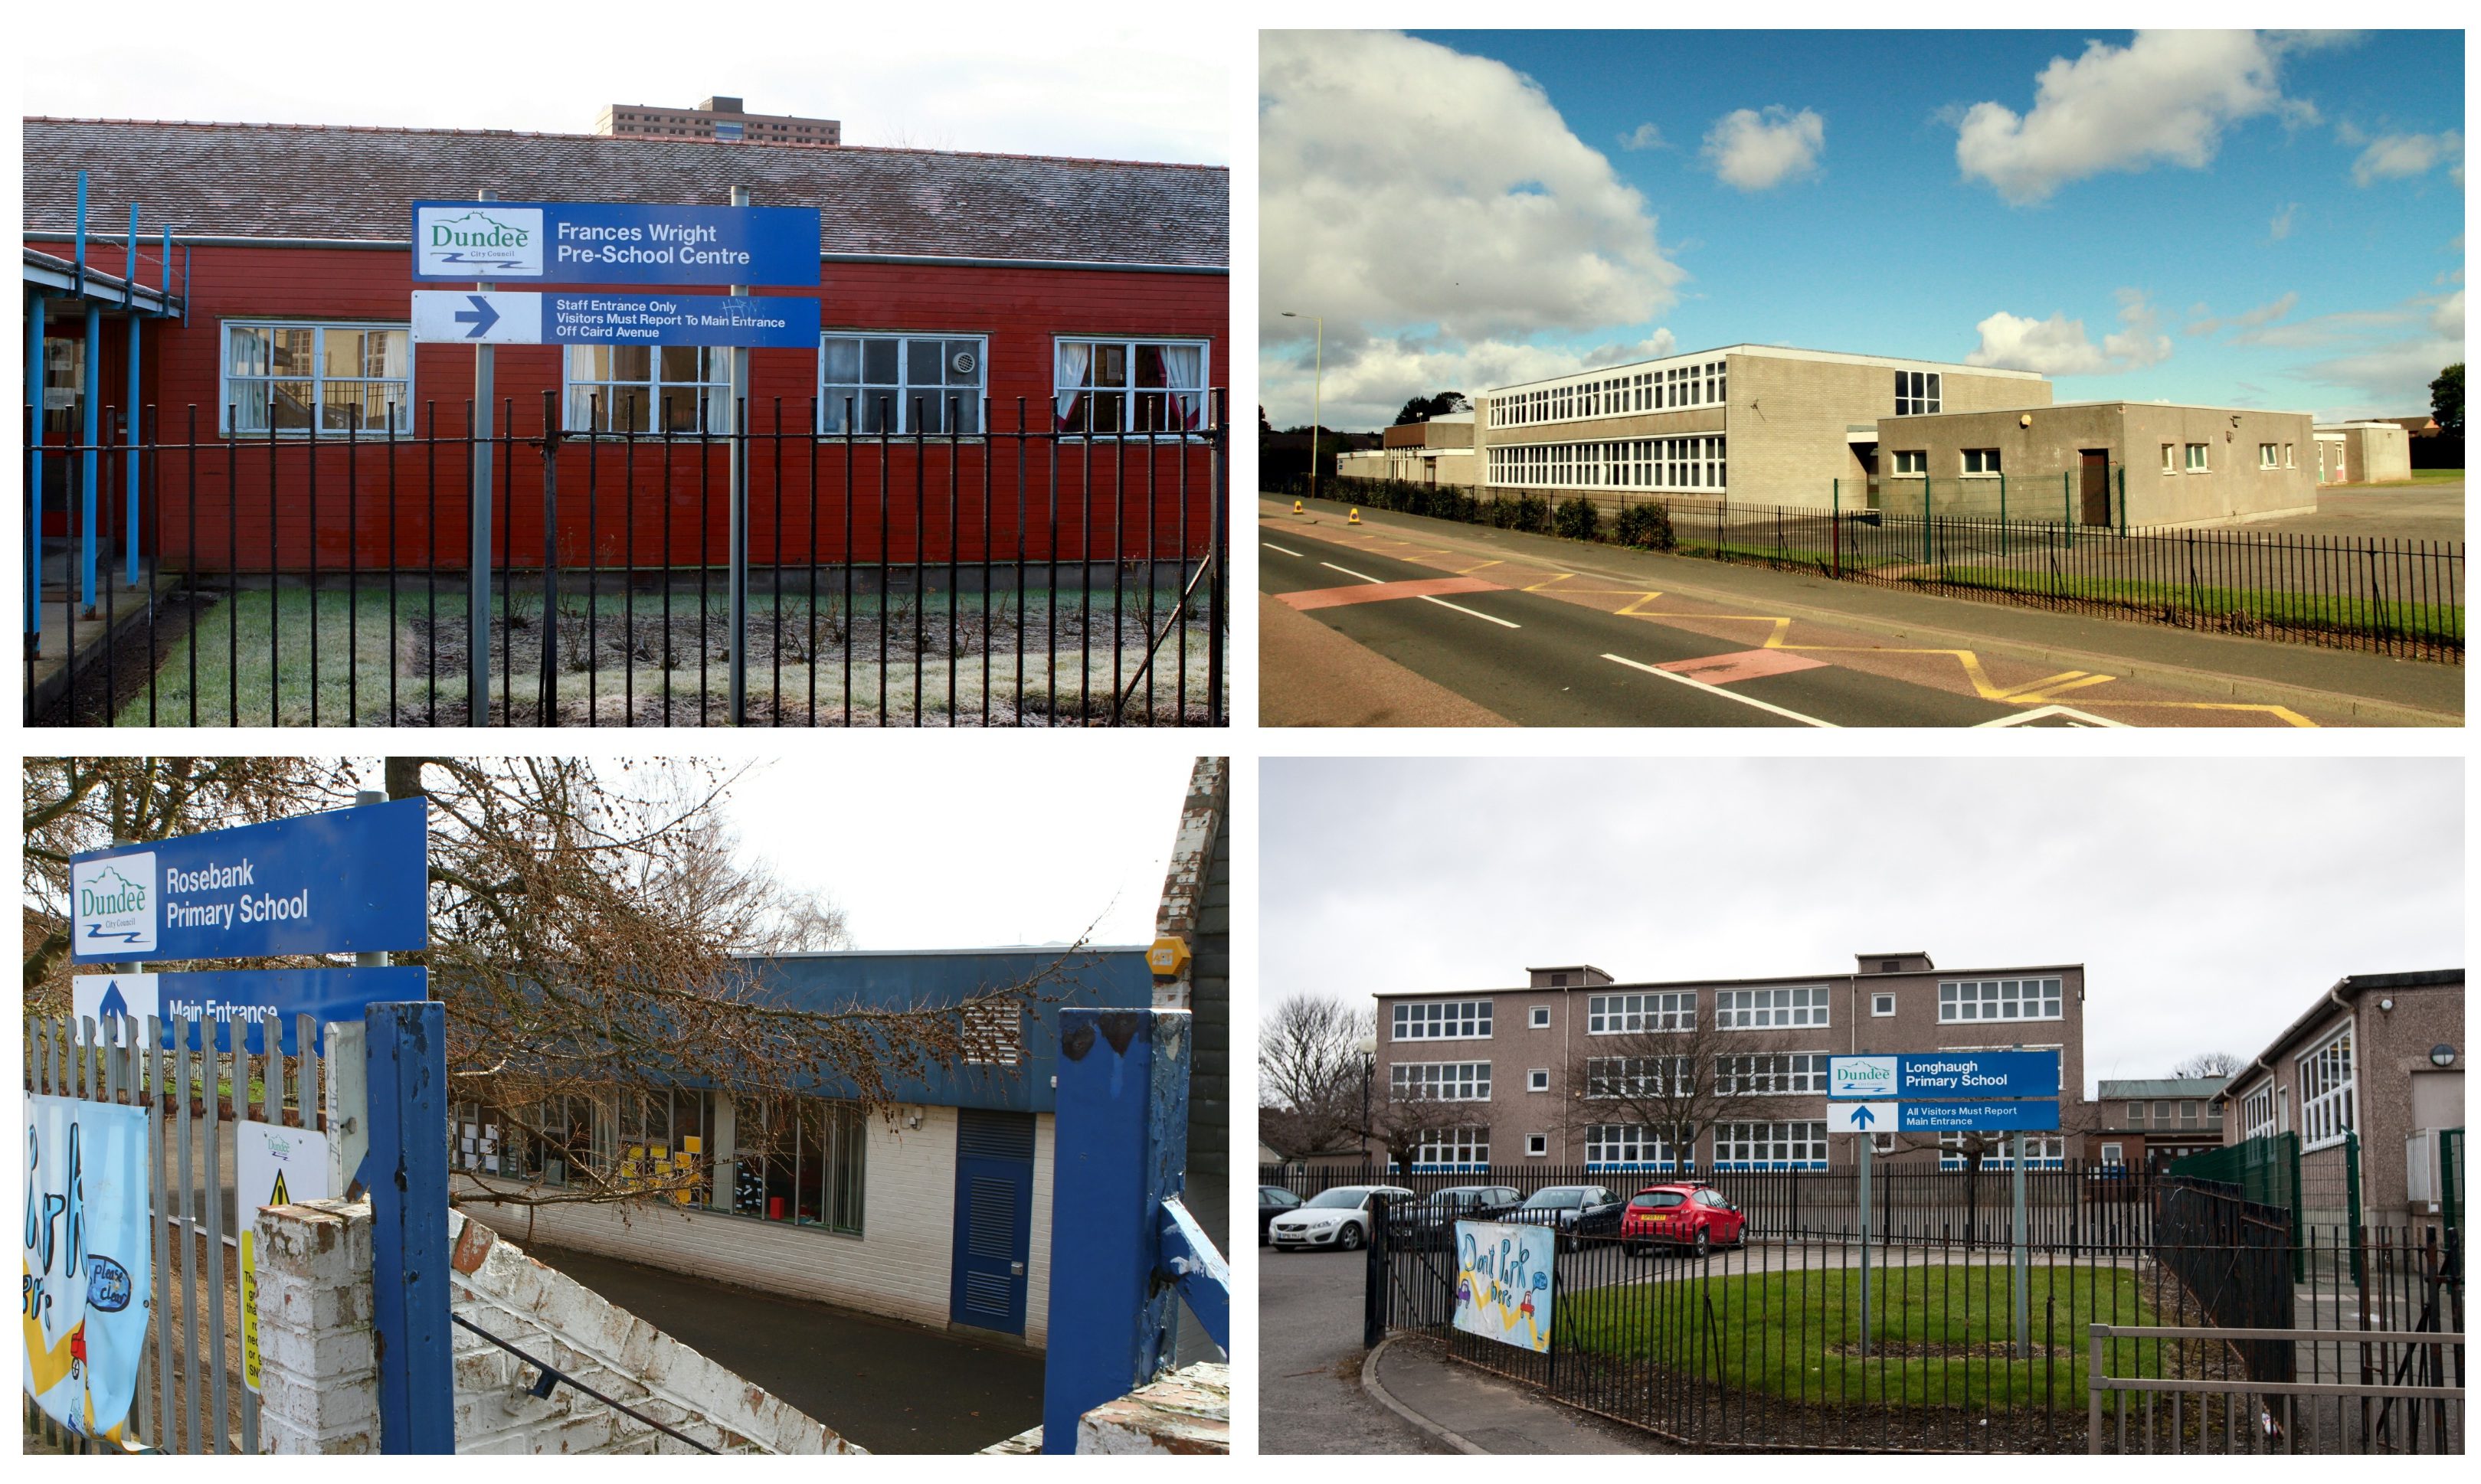 Frances Wright Pre-School, and St Luke’s and St Matthew’s, Longhaugh and Rosebank schools.